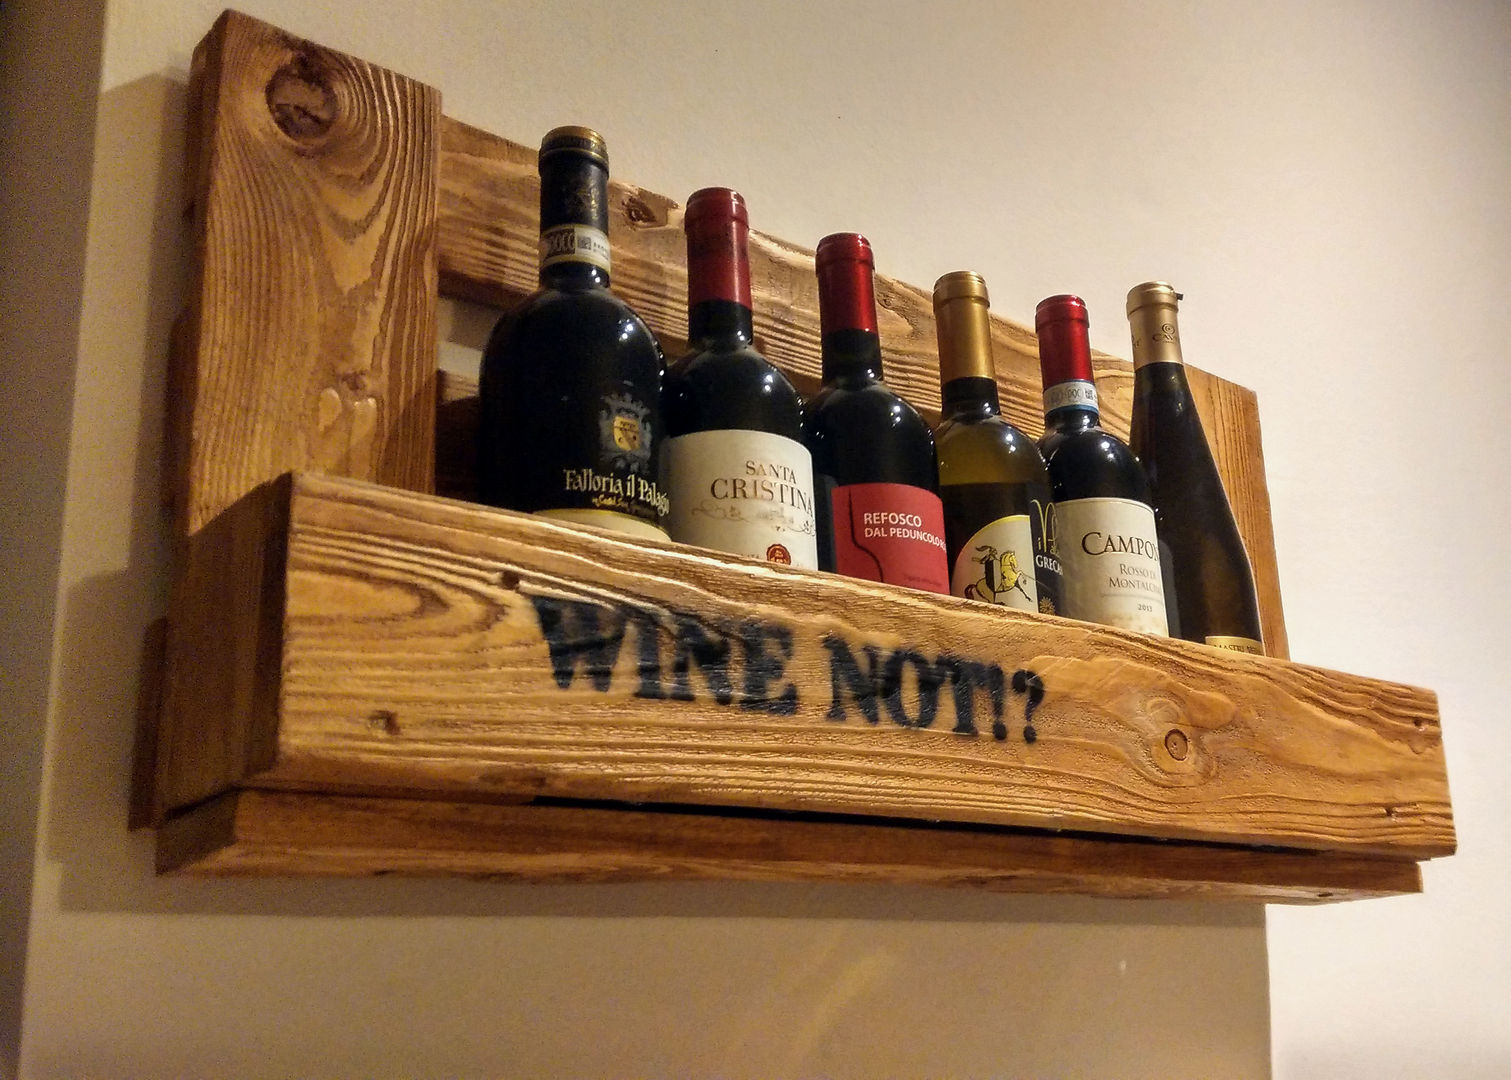 Portabottiglie WINE NOT!?, IDEA - Ivan de Angelis IDEA - Ivan de Angelis Rustic style wine cellar Solid Wood Multicolored Wine cellar